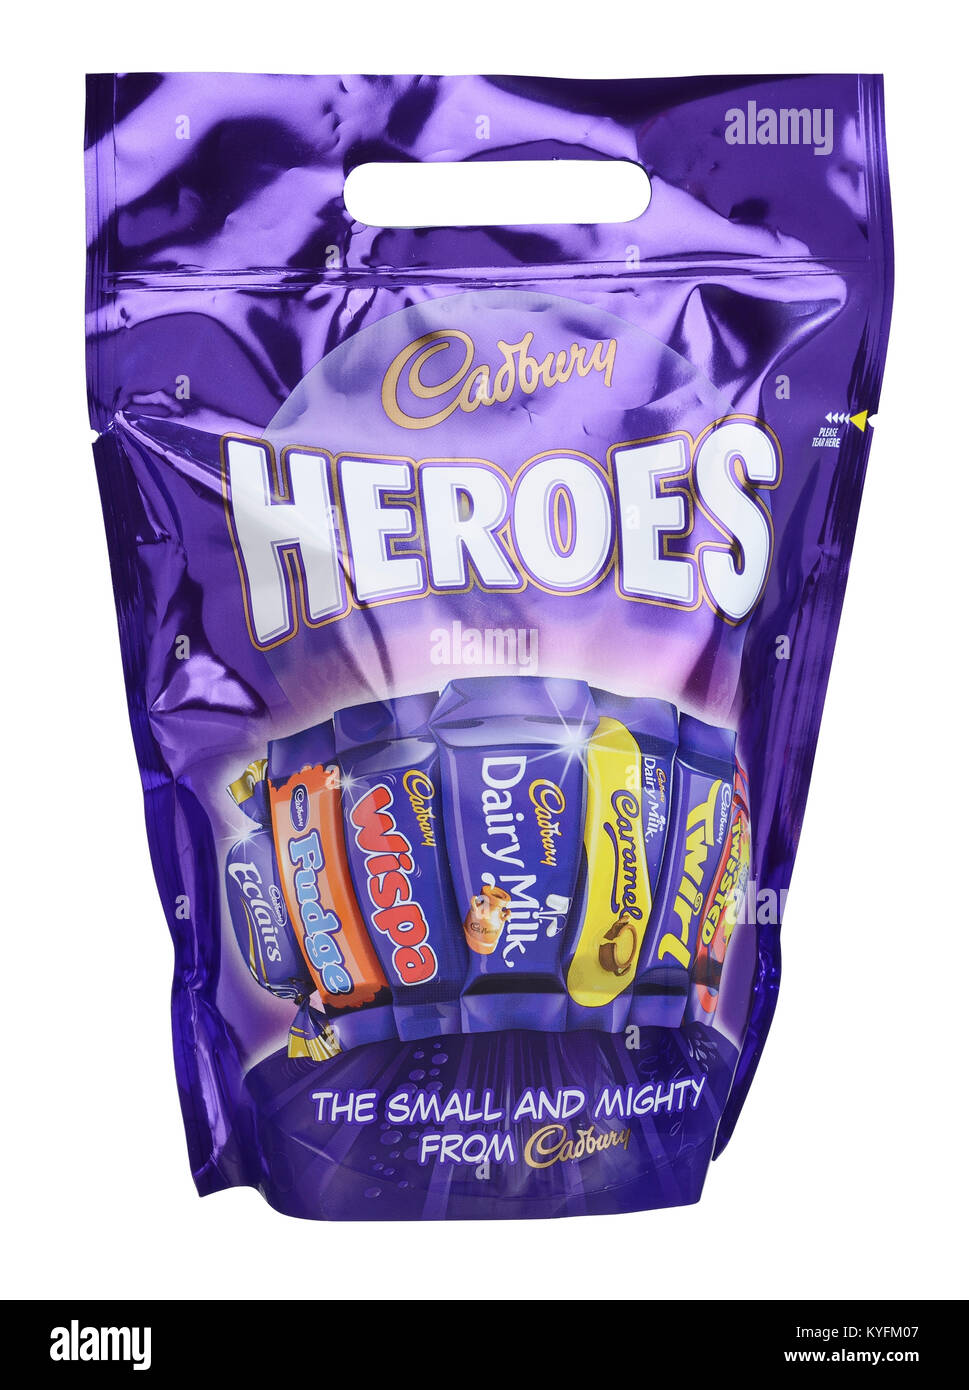 Bag of Cadbury Heroes chocolate assortment Stock Photo